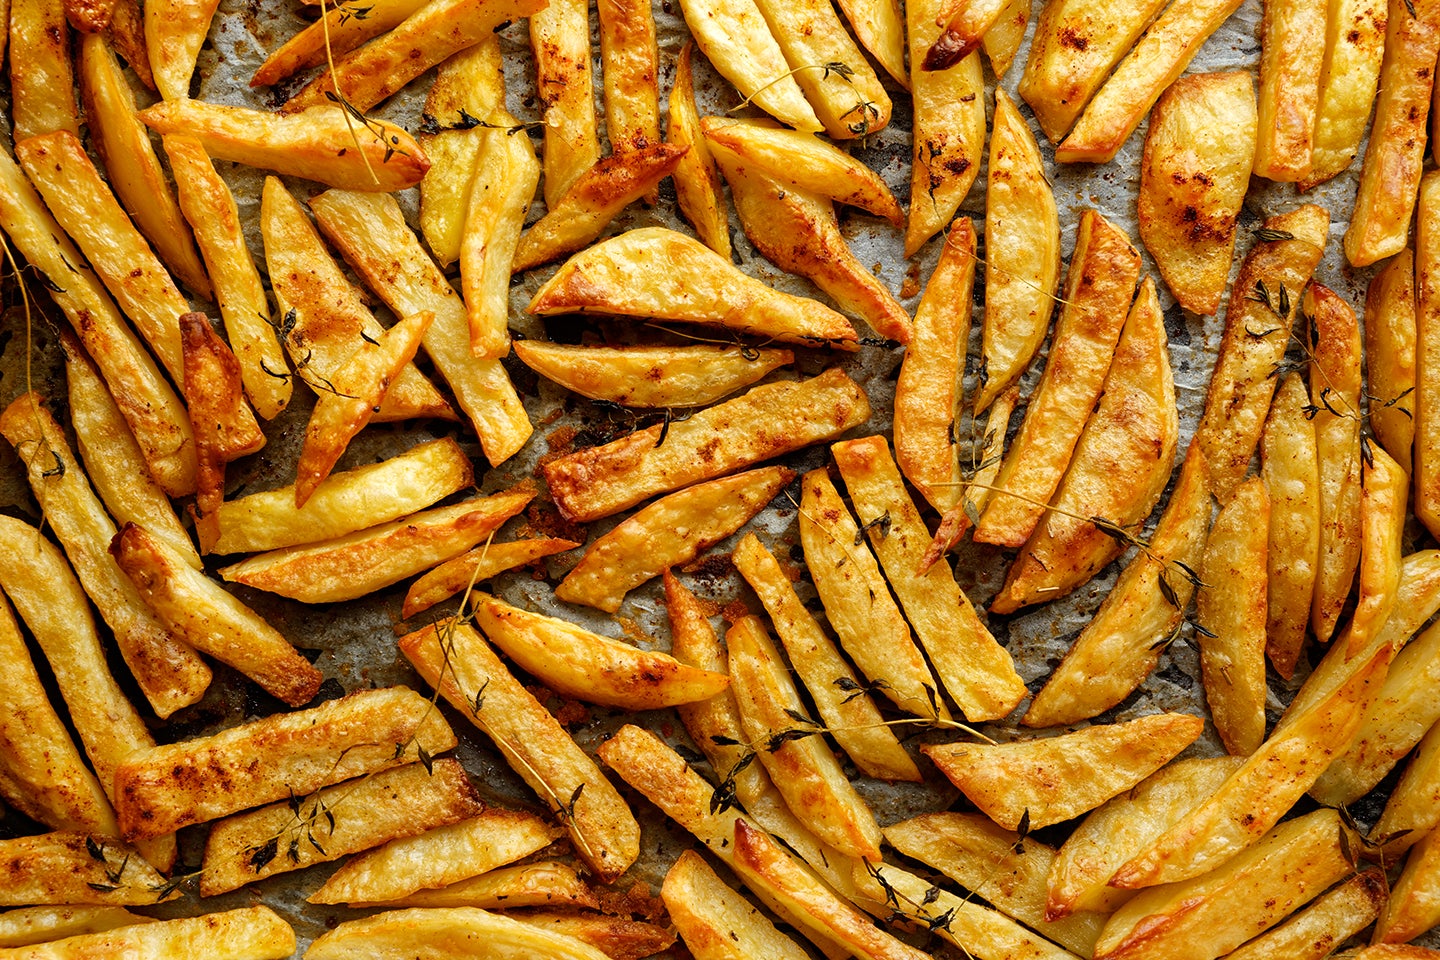 Seasoned fries on a baking sheet.